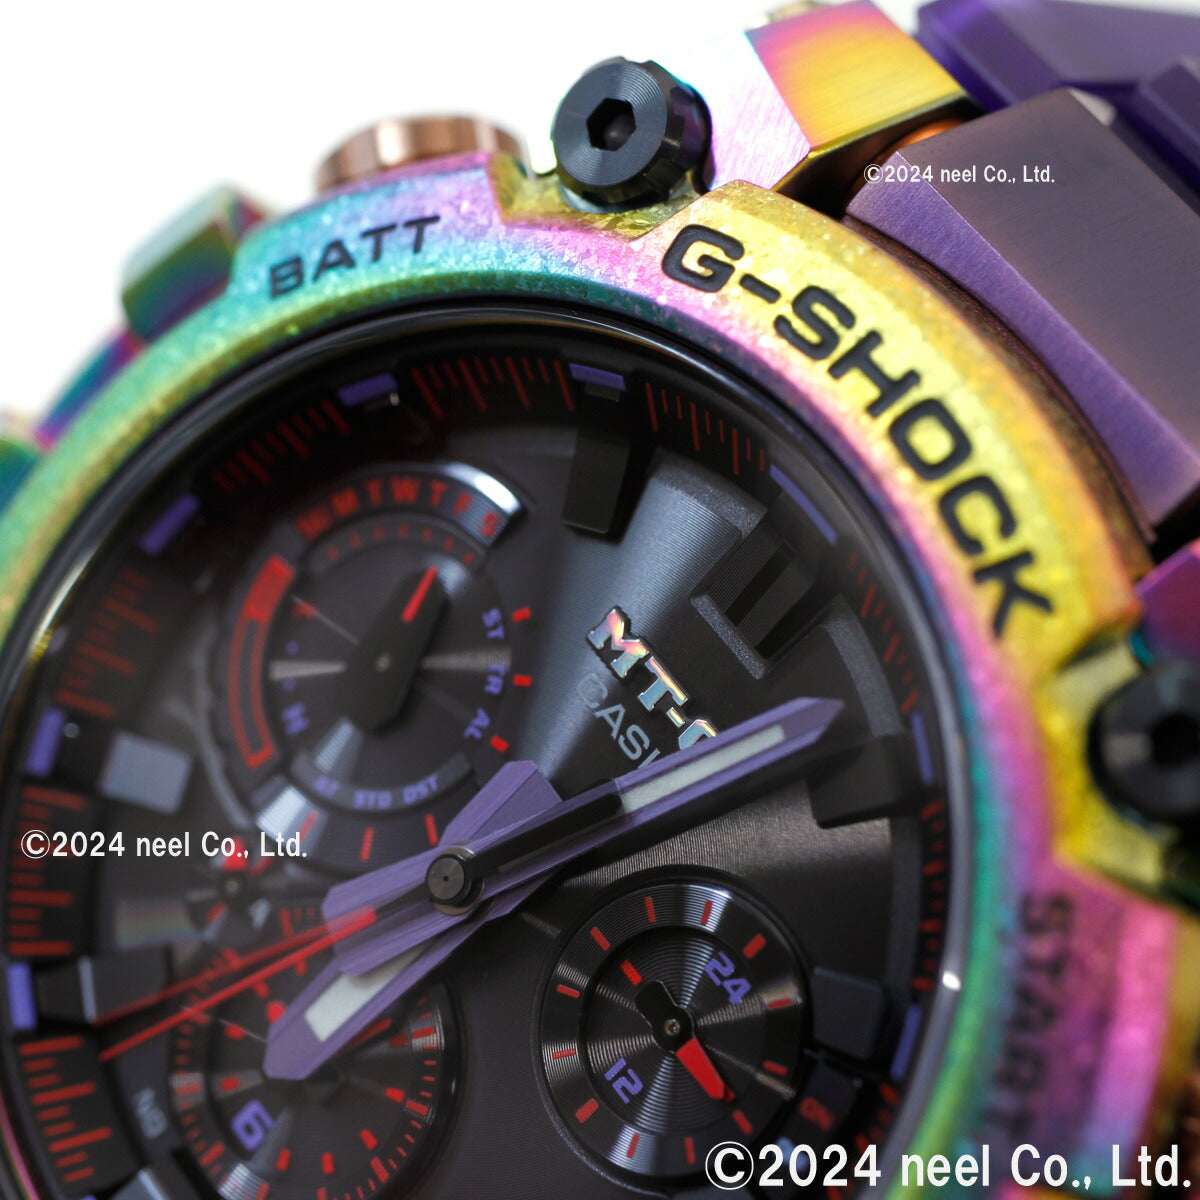 MT-G G-SHOCK 電波 ソーラー 電波時計 カシオ Gショック CASIO 限定モデル 腕時計 メンズ スマートフォンリンク タフソーラー MTG-B3000PRB-1AJR オーロラオーバル